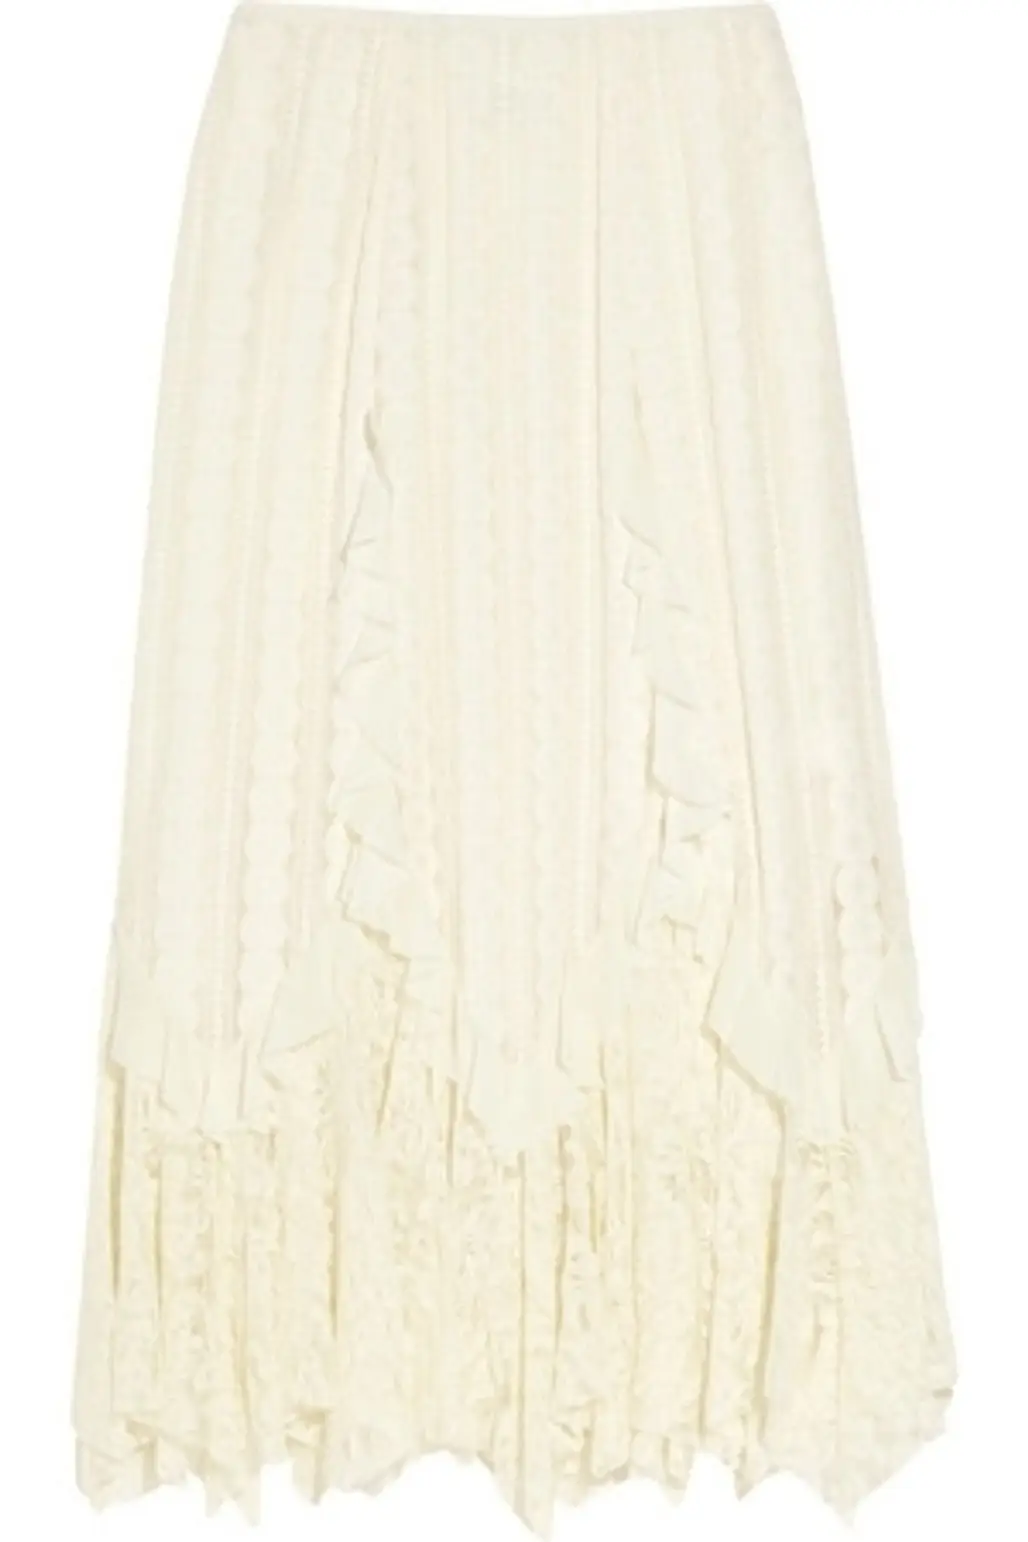 Anna Sui Ruffled Lace Midi Skirt